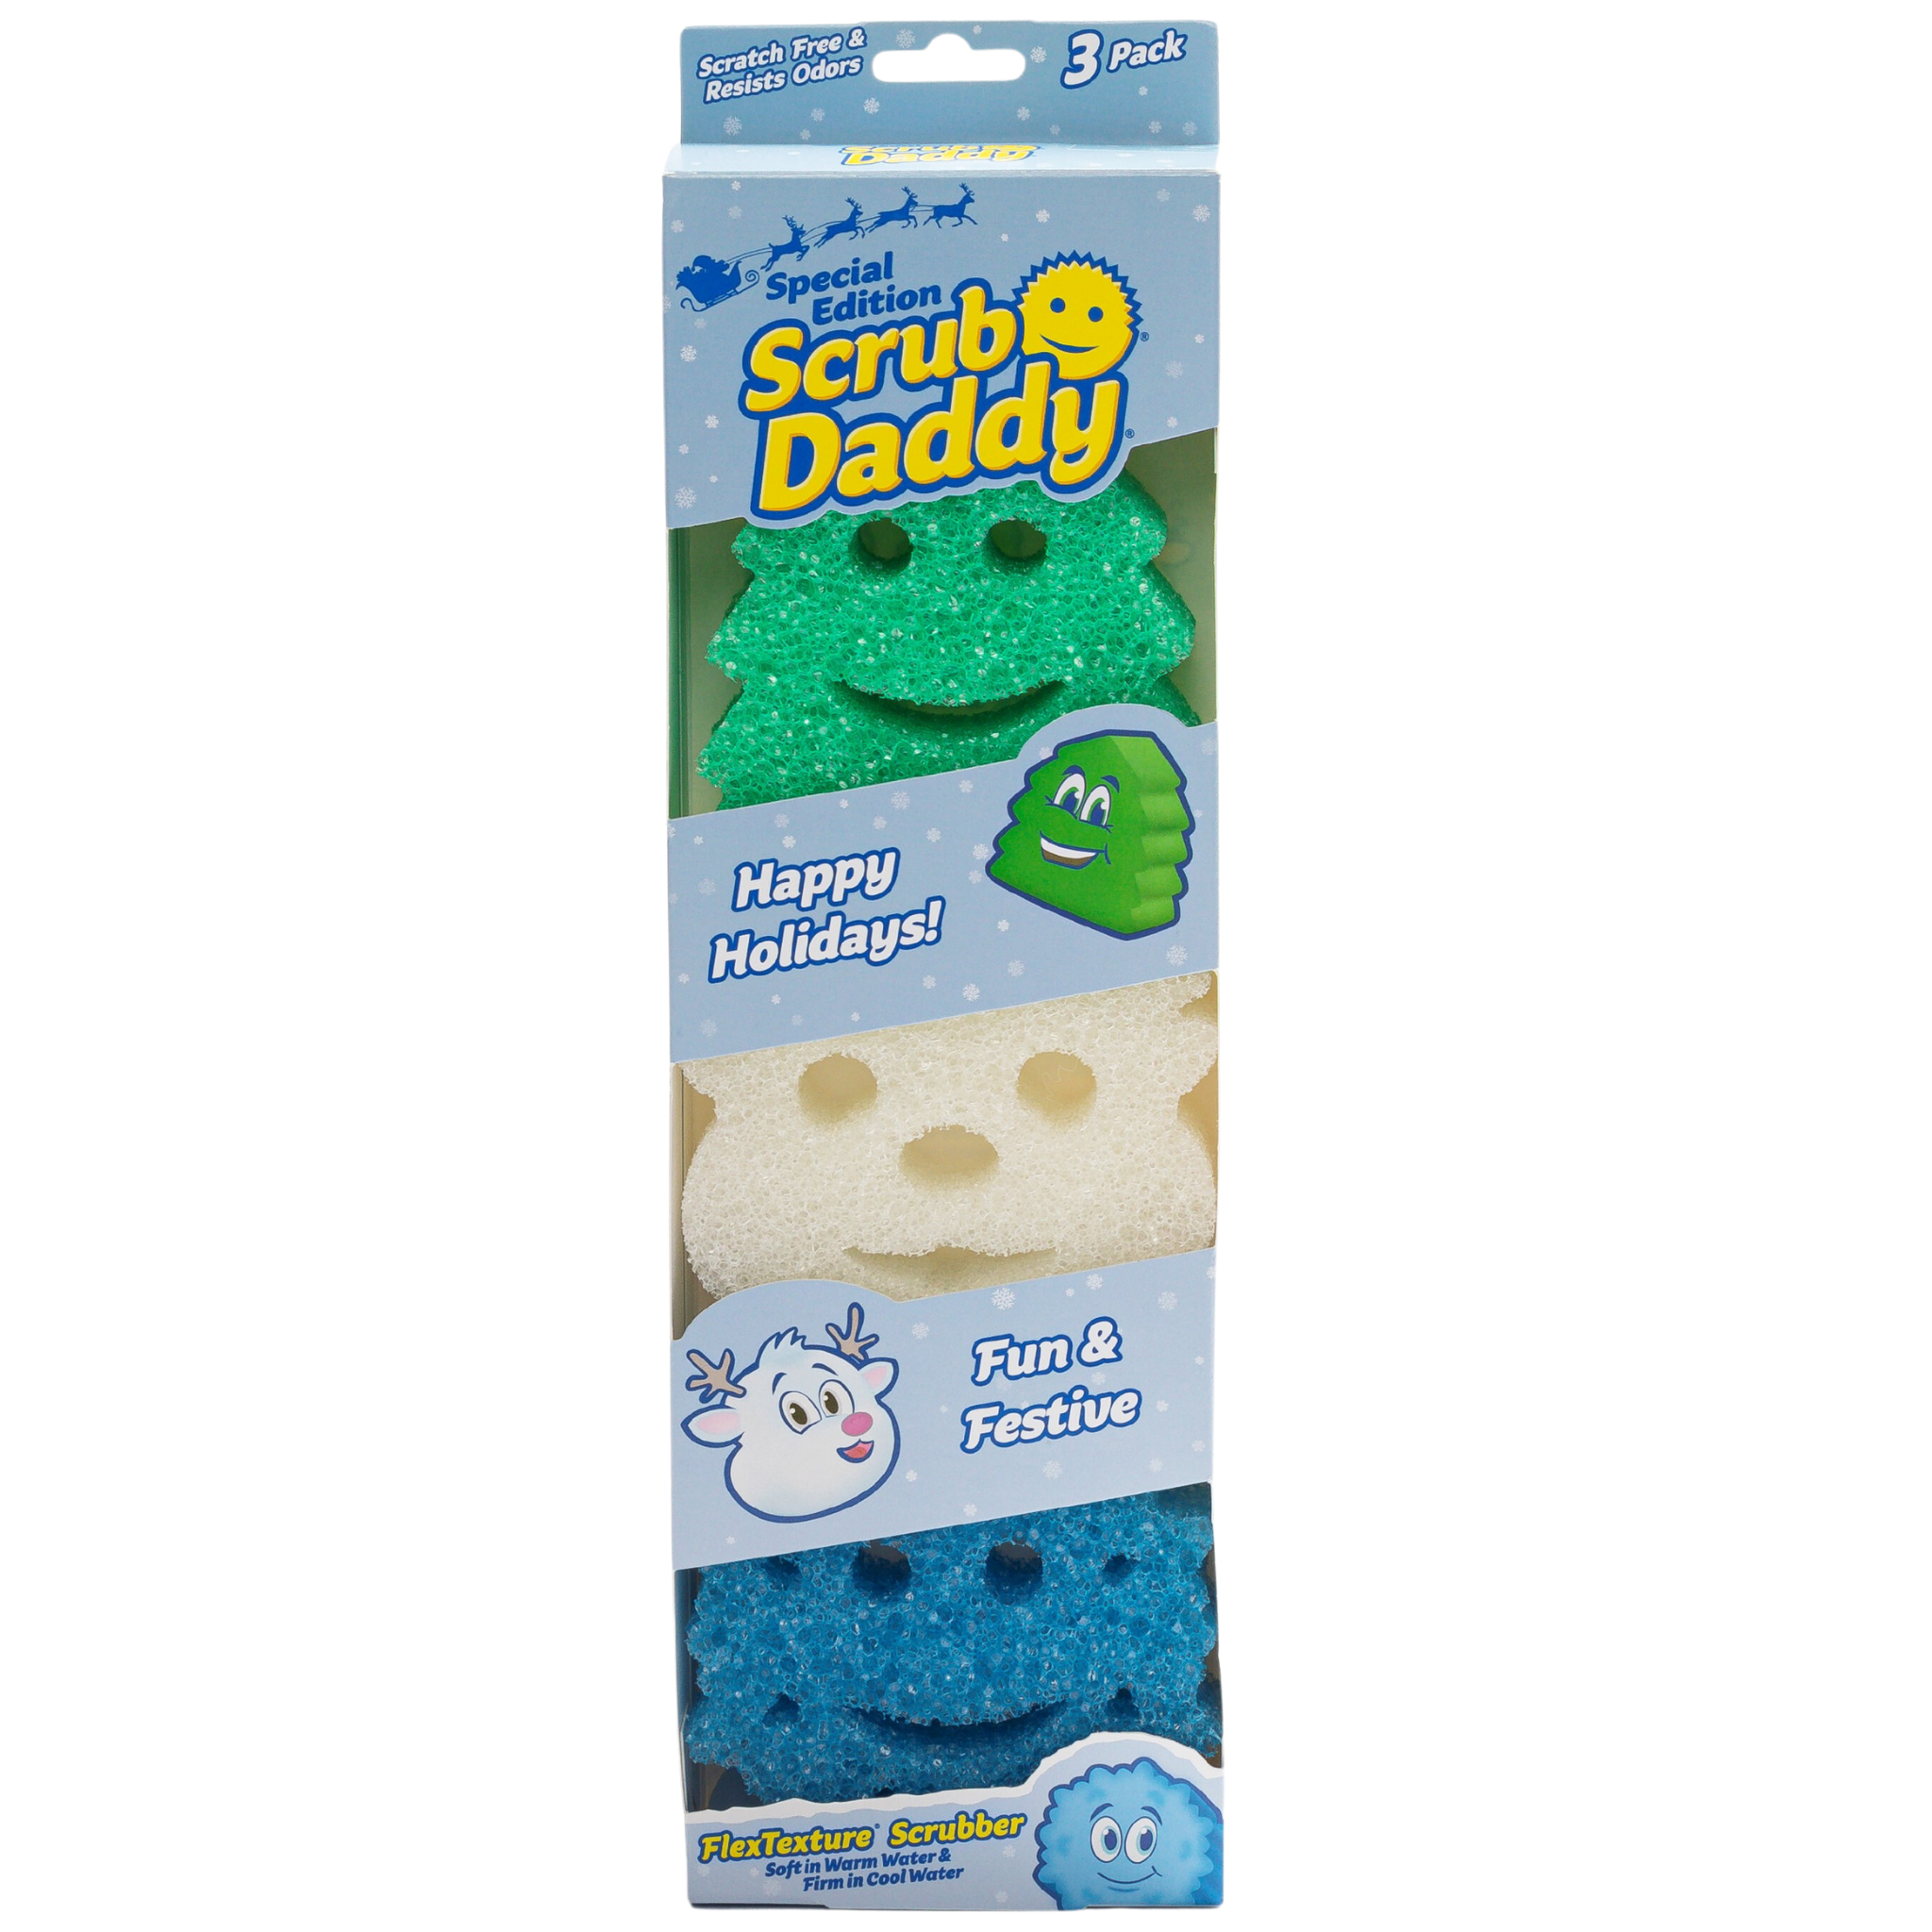 Scrub Daddy UK - The Limited Edition Christmas Pack 2021! With THREE  limited edition sponges 😮 Green Scrub Mommy, White & Red Scrub Daddy!  #ScrubDaddyChristmas 🎁 Just head to scrubdaddy.co.uk/christmas #scrubdaddy  #scrubdaddyuk #